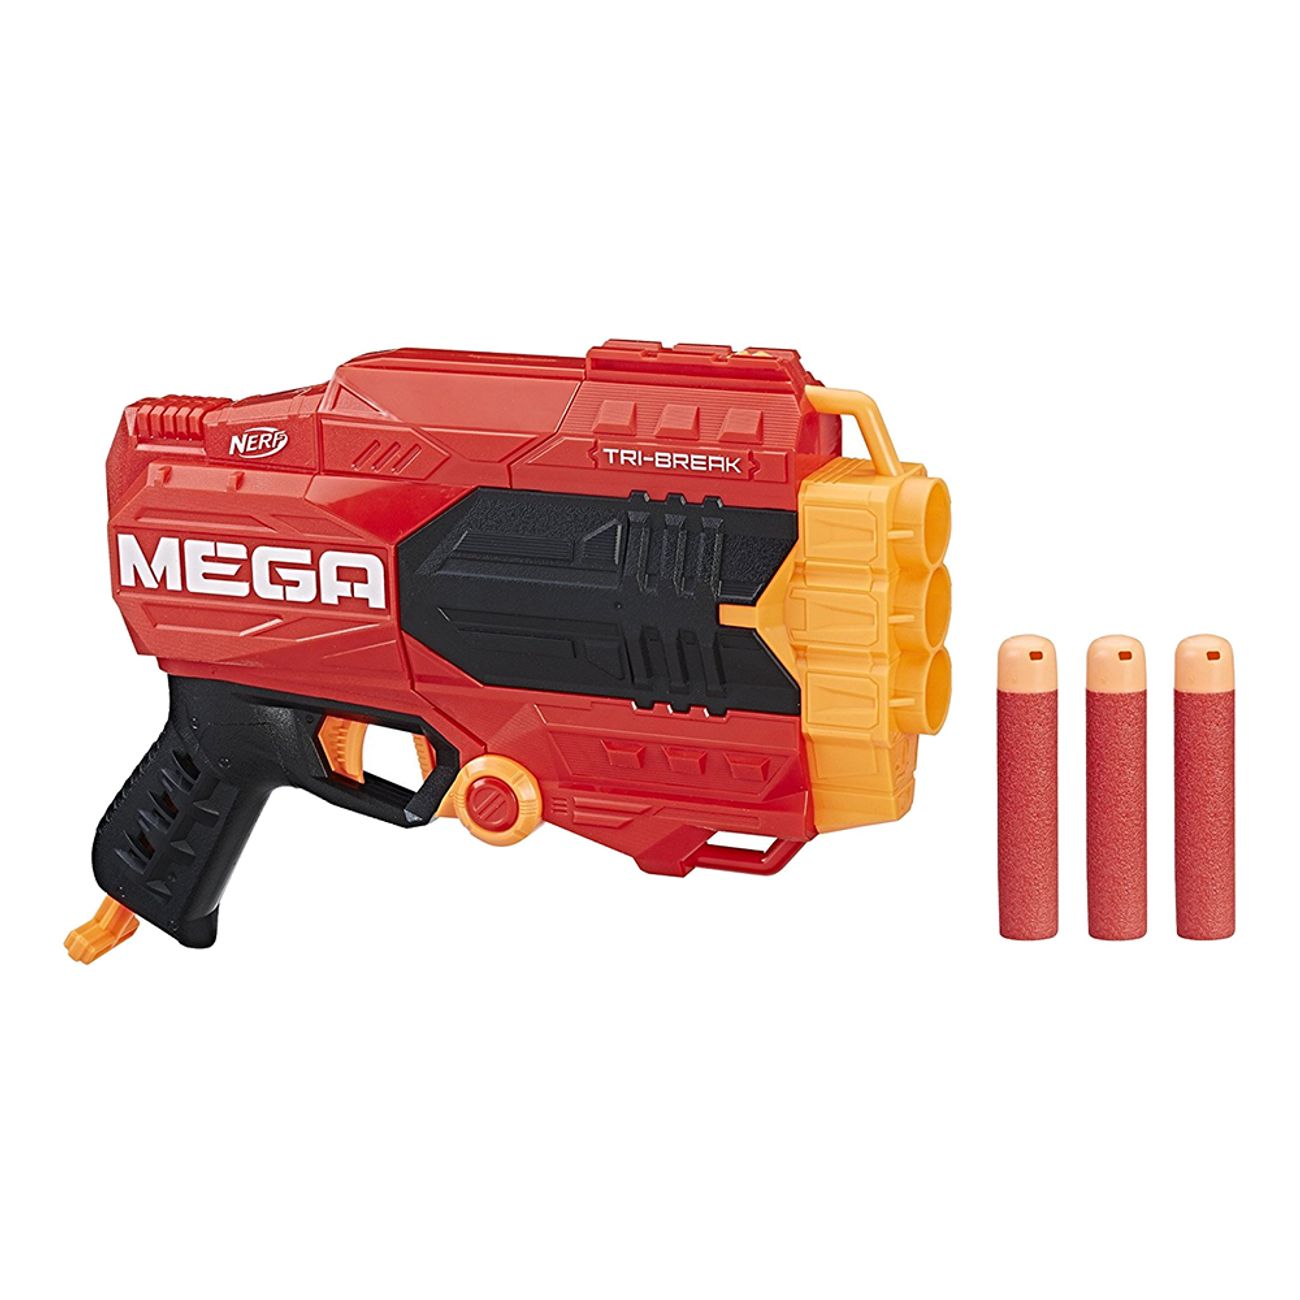 nerf-mega-tri-break-blaster-1